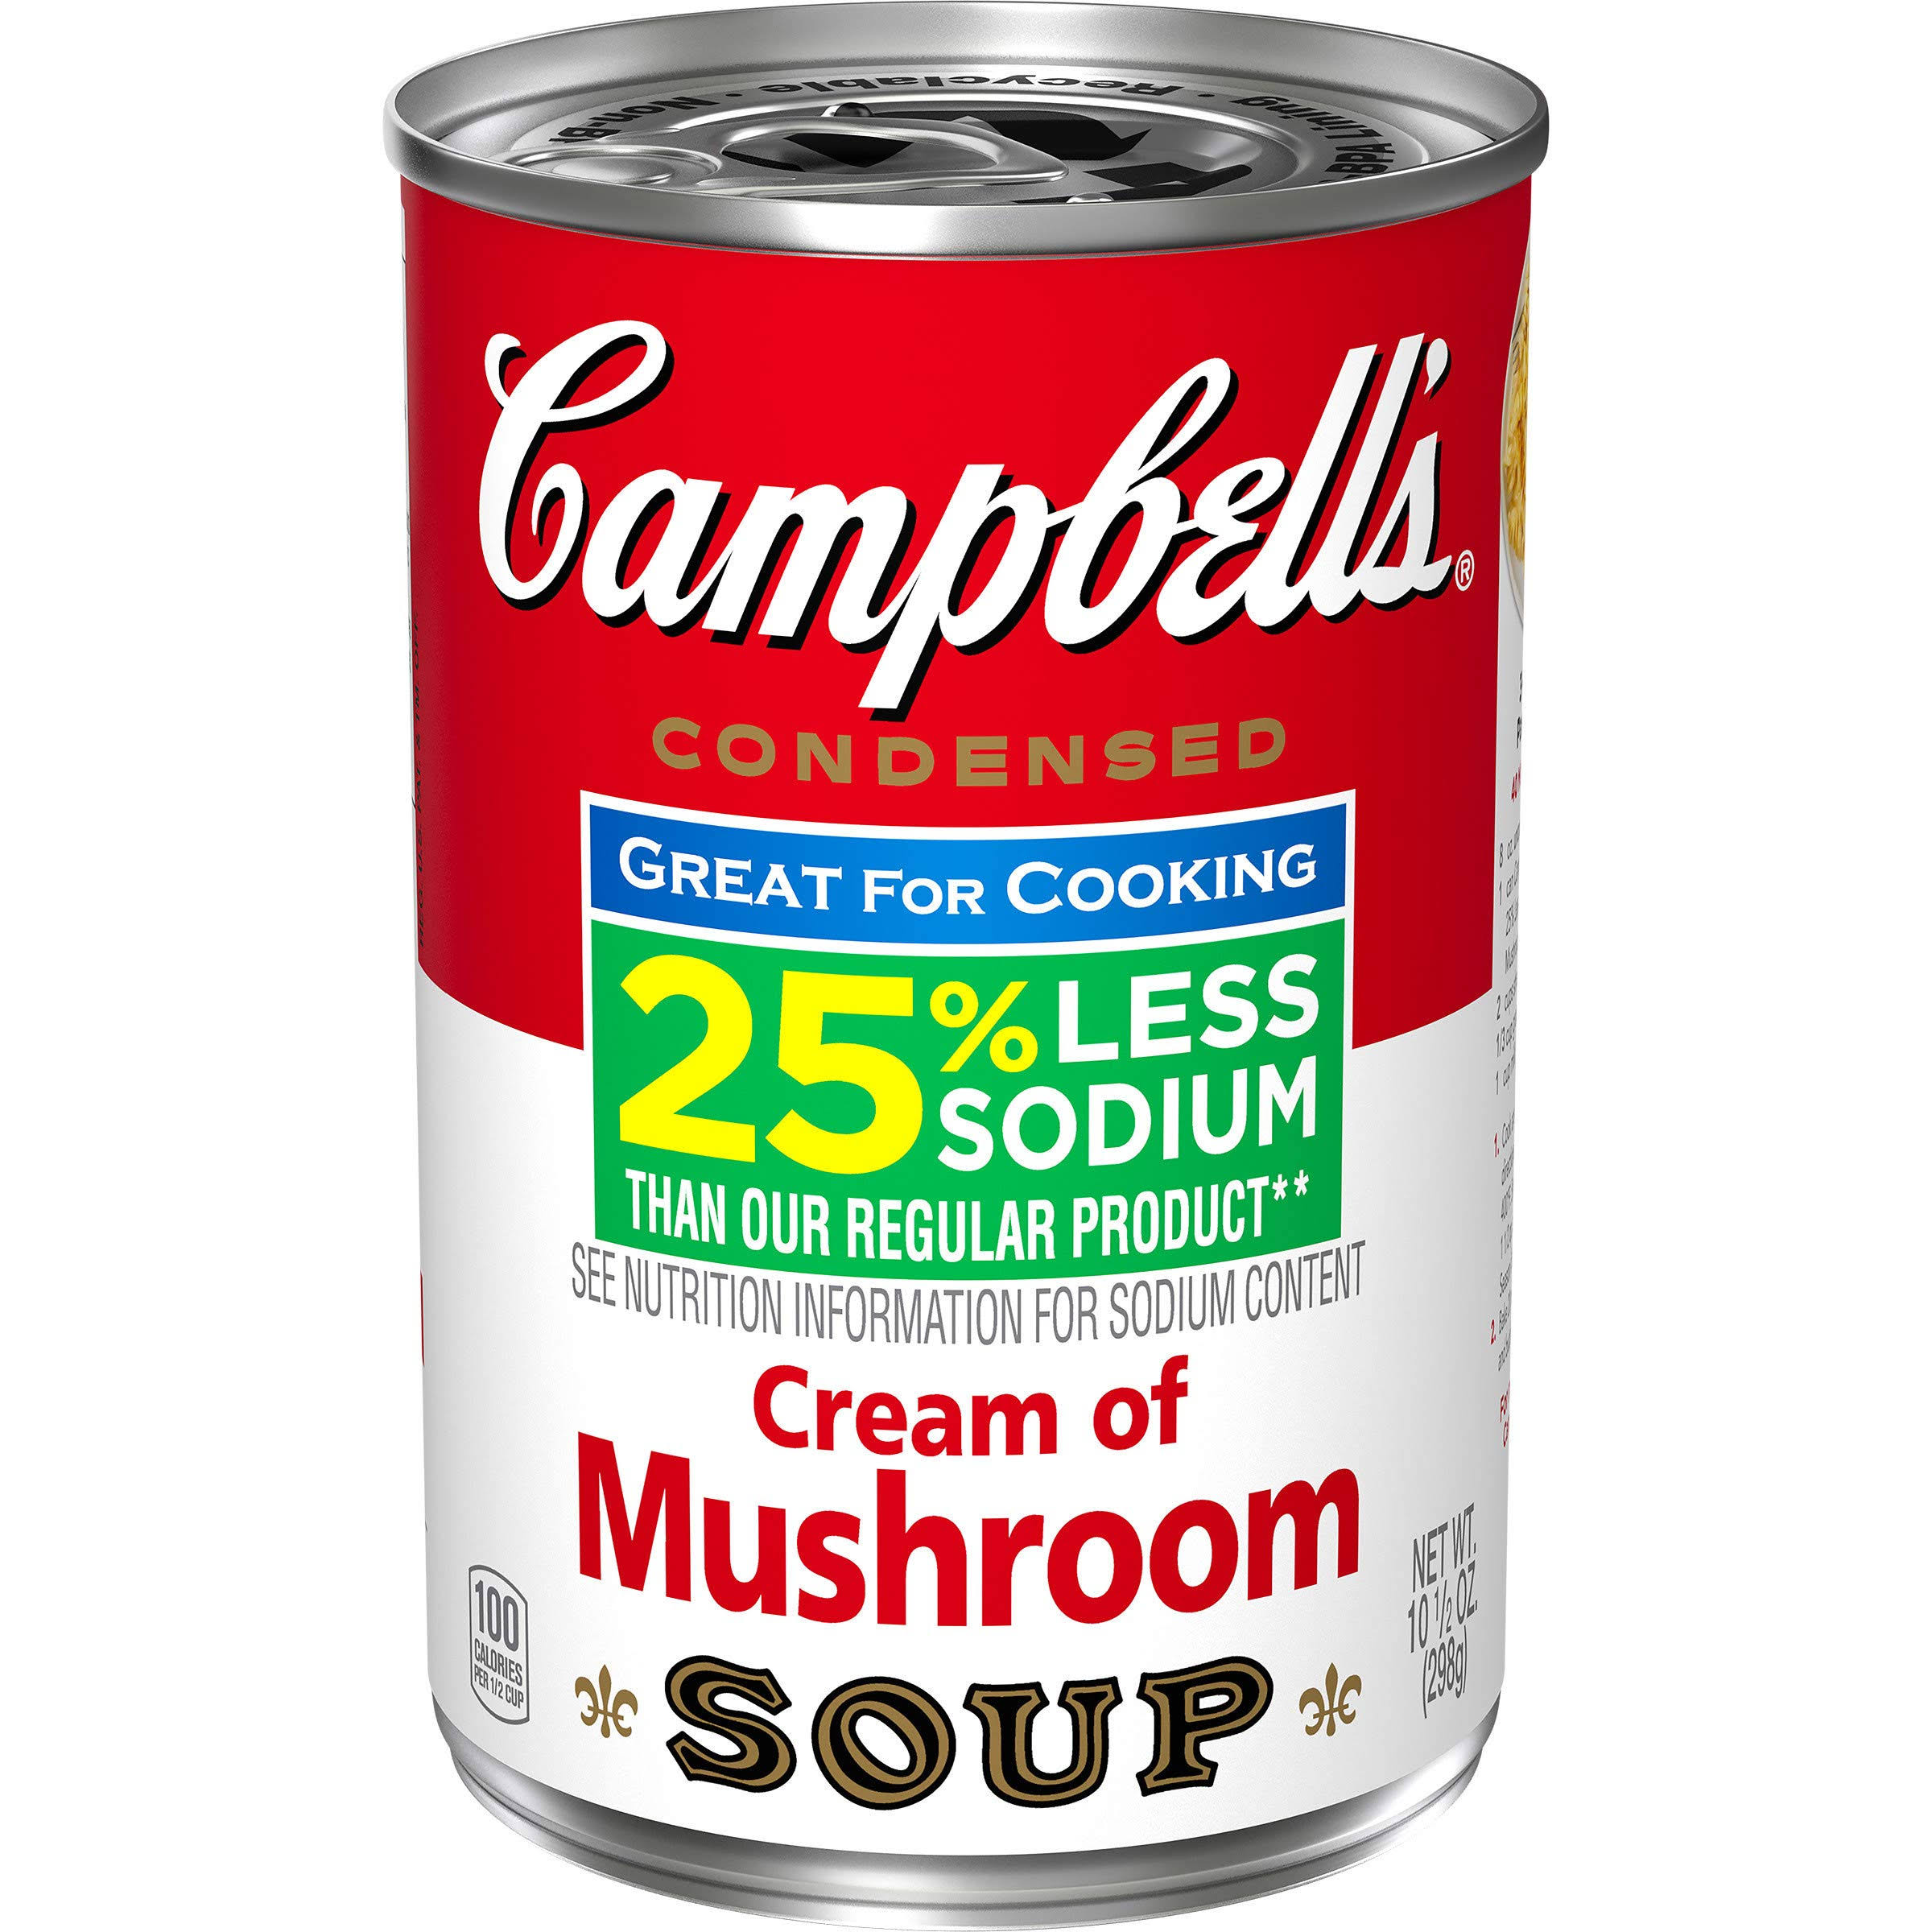 Campbell's Cream of Mushroom Condensed Soup - 10.5oz